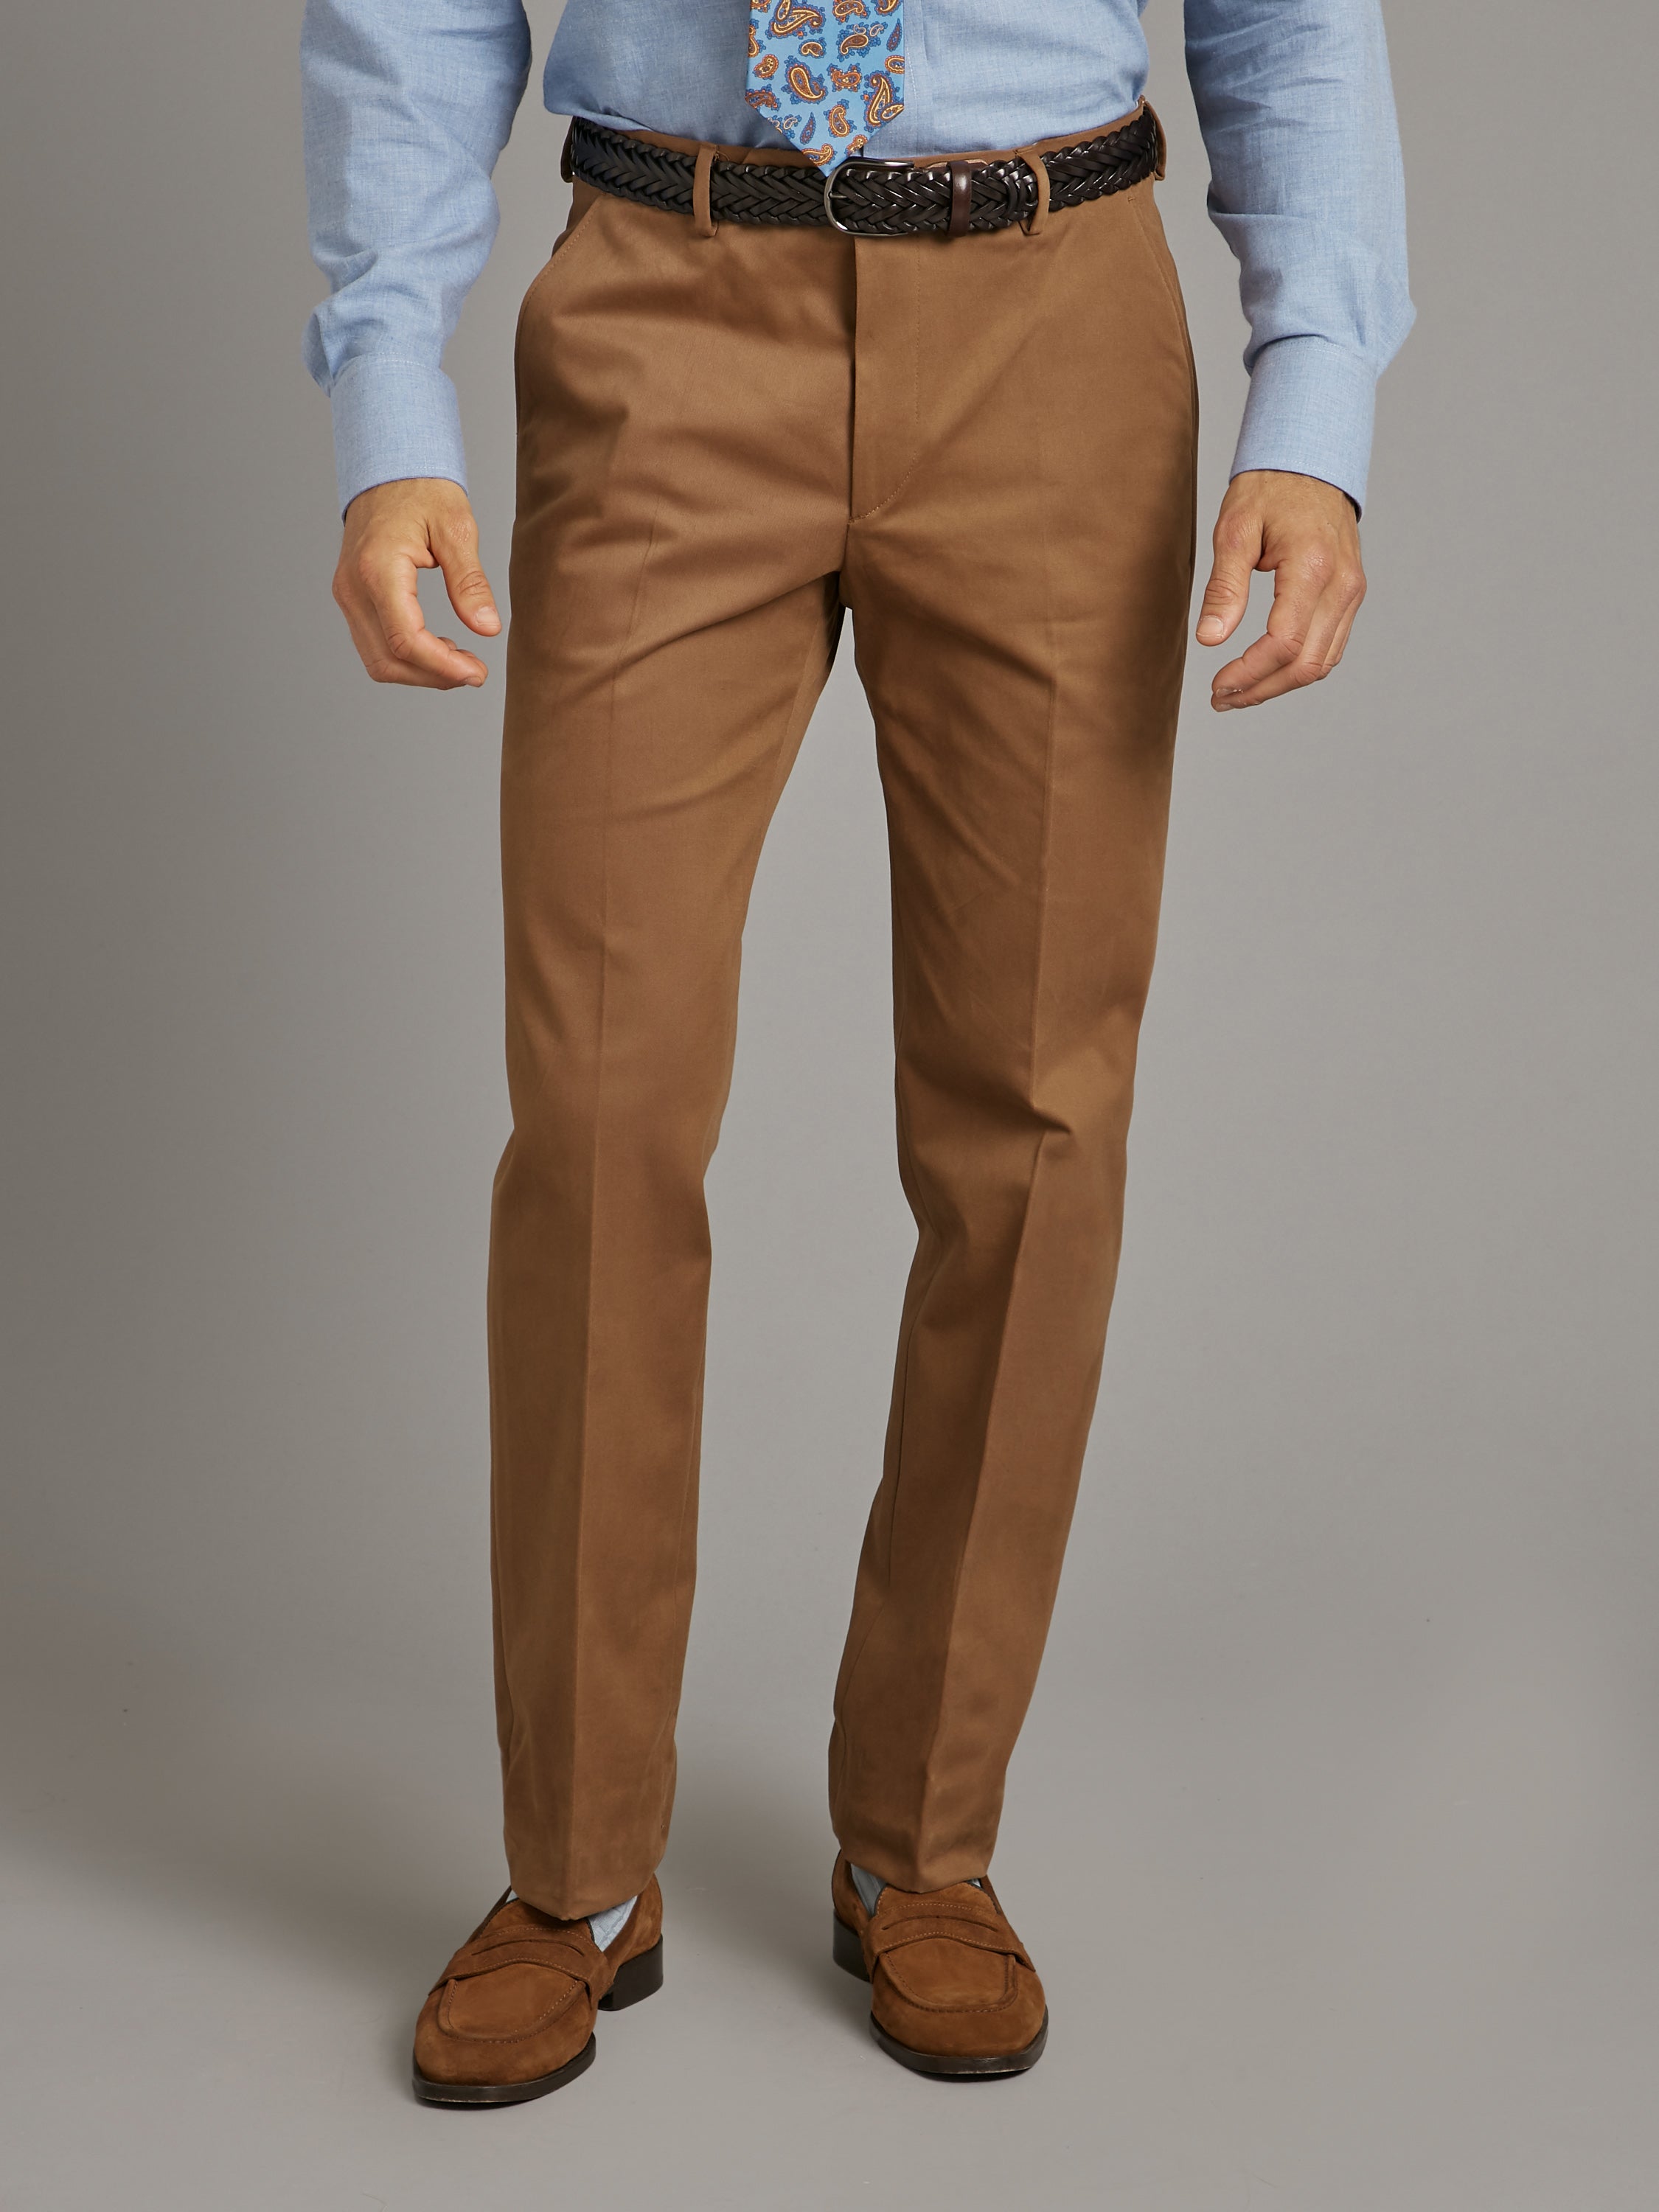 TOAST RUST BROWN Cotton STRAIGHT LEG Jean trousers Size UK 14 BNWOT | eBay